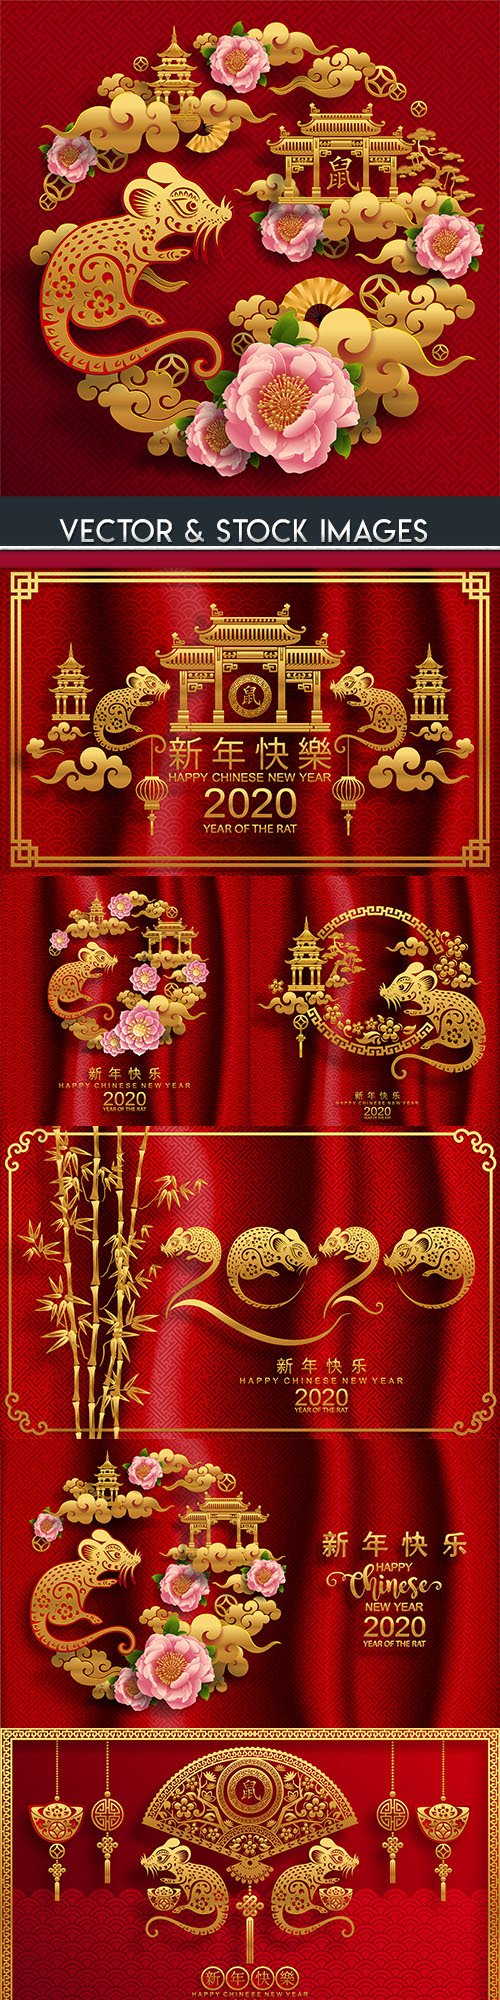 Rat symbol of Chinese New Year 2020 illustration